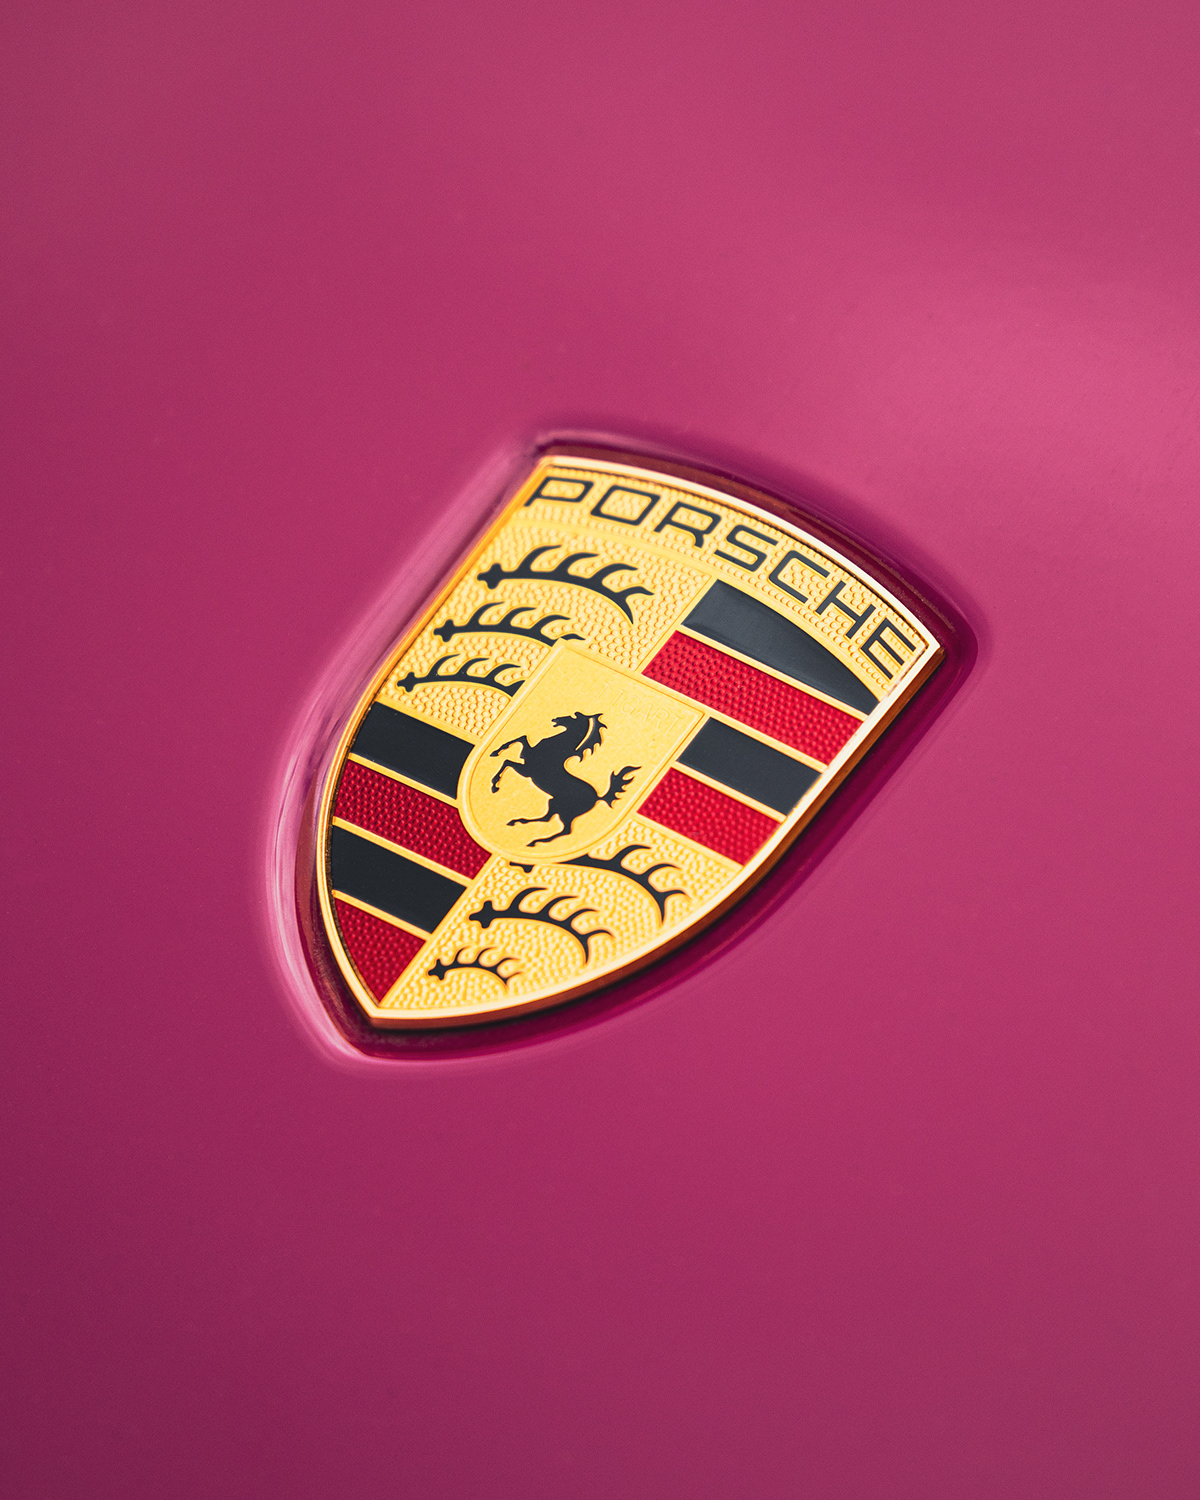 Porsche sxsw sydney Australia Photography  Cars luxury car Event automotive  